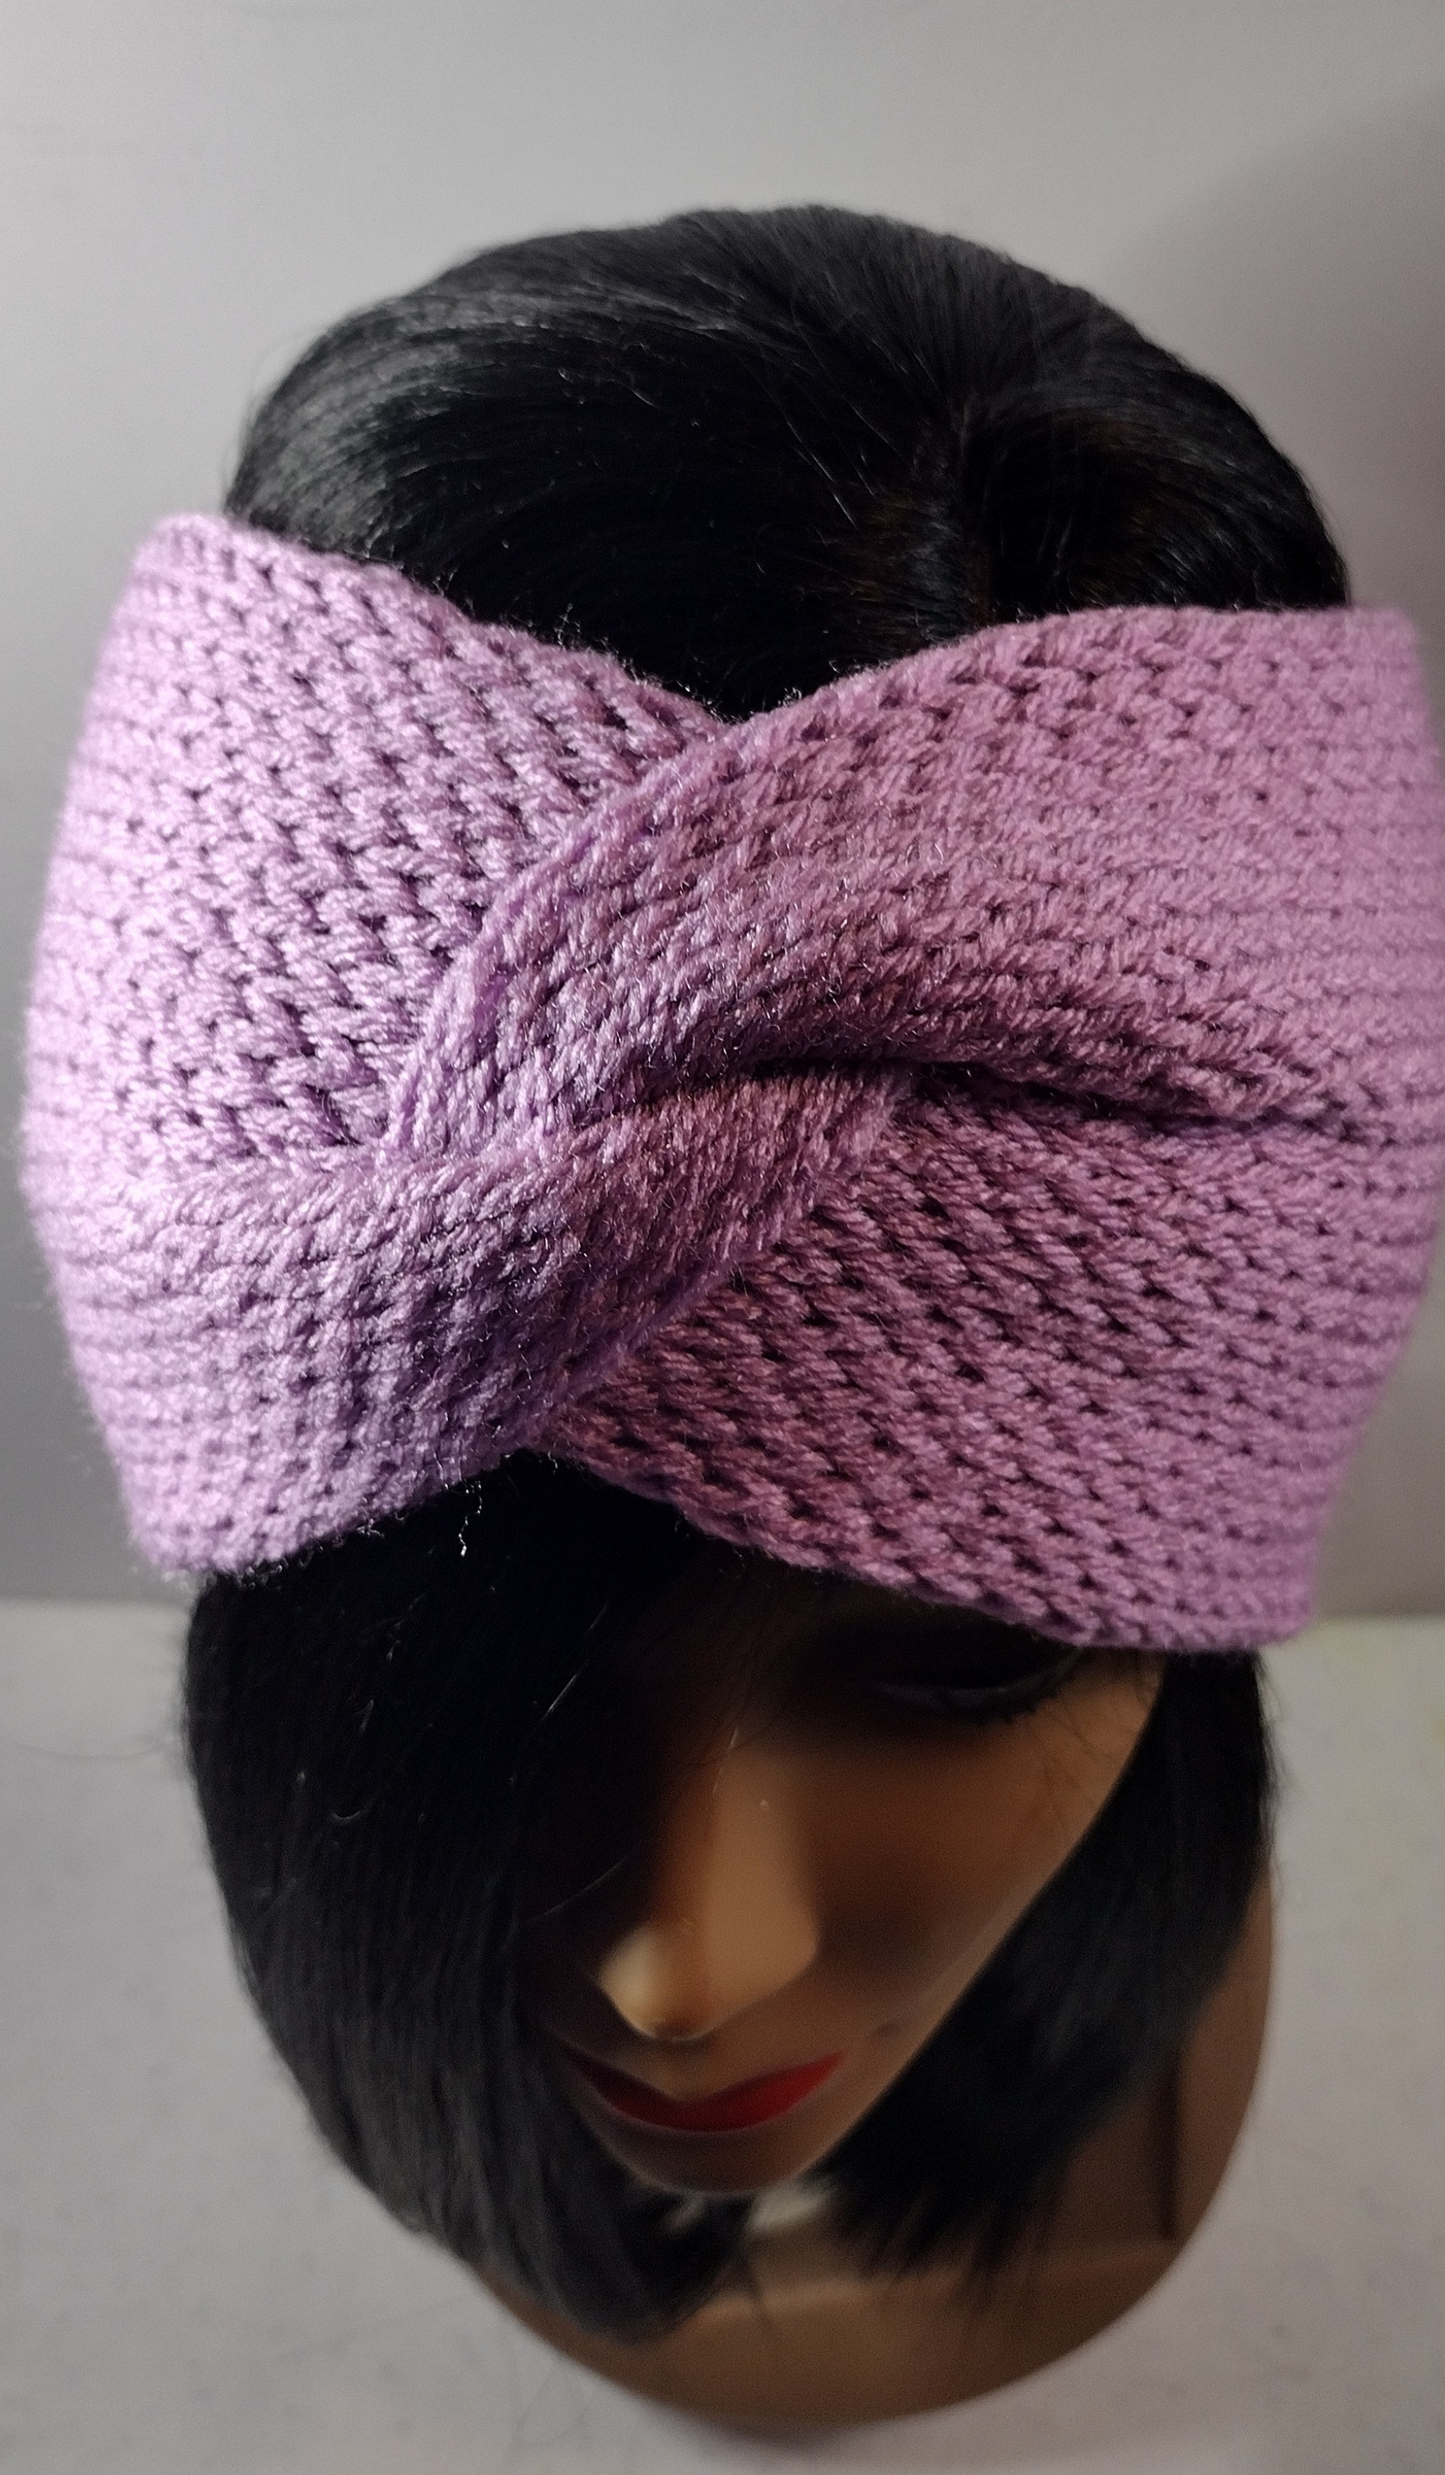 Blk Lotus Co Lavender Twist Knit Headband: Serene Style and Winter Comfort